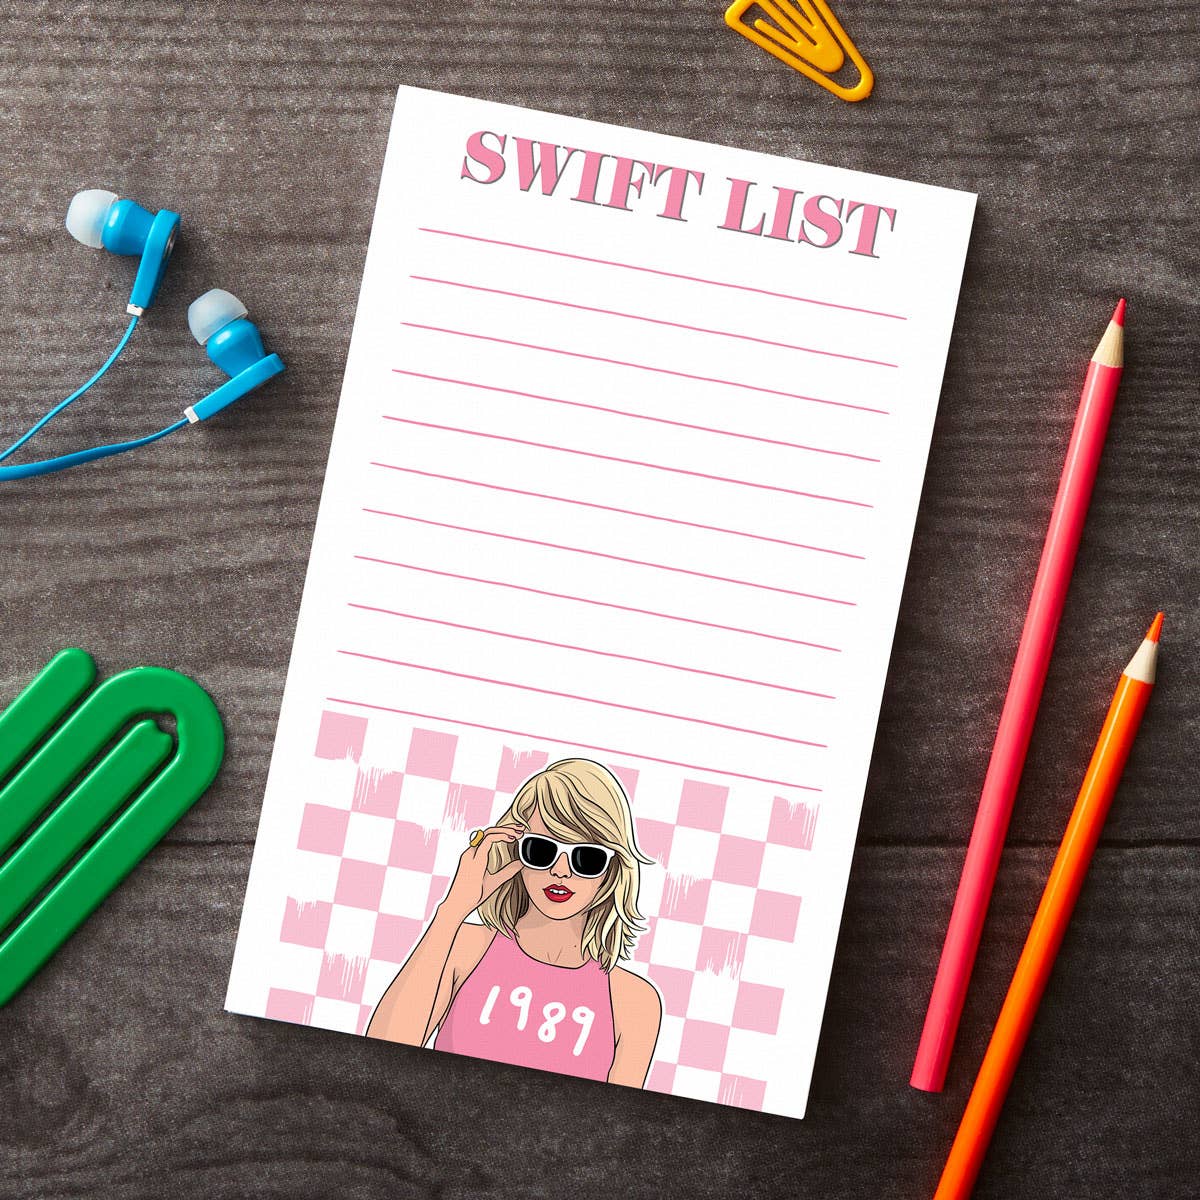 Taylor “Swift List” Notepad